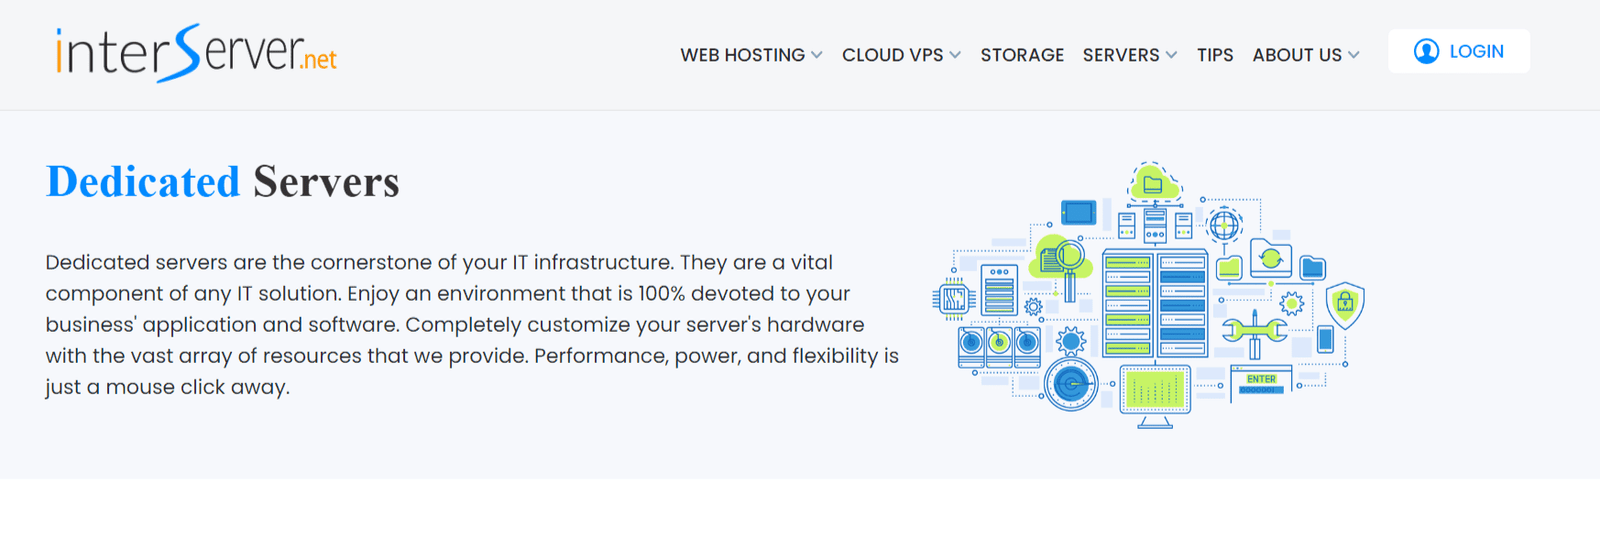 InterServer’s dedicated server hosting page.